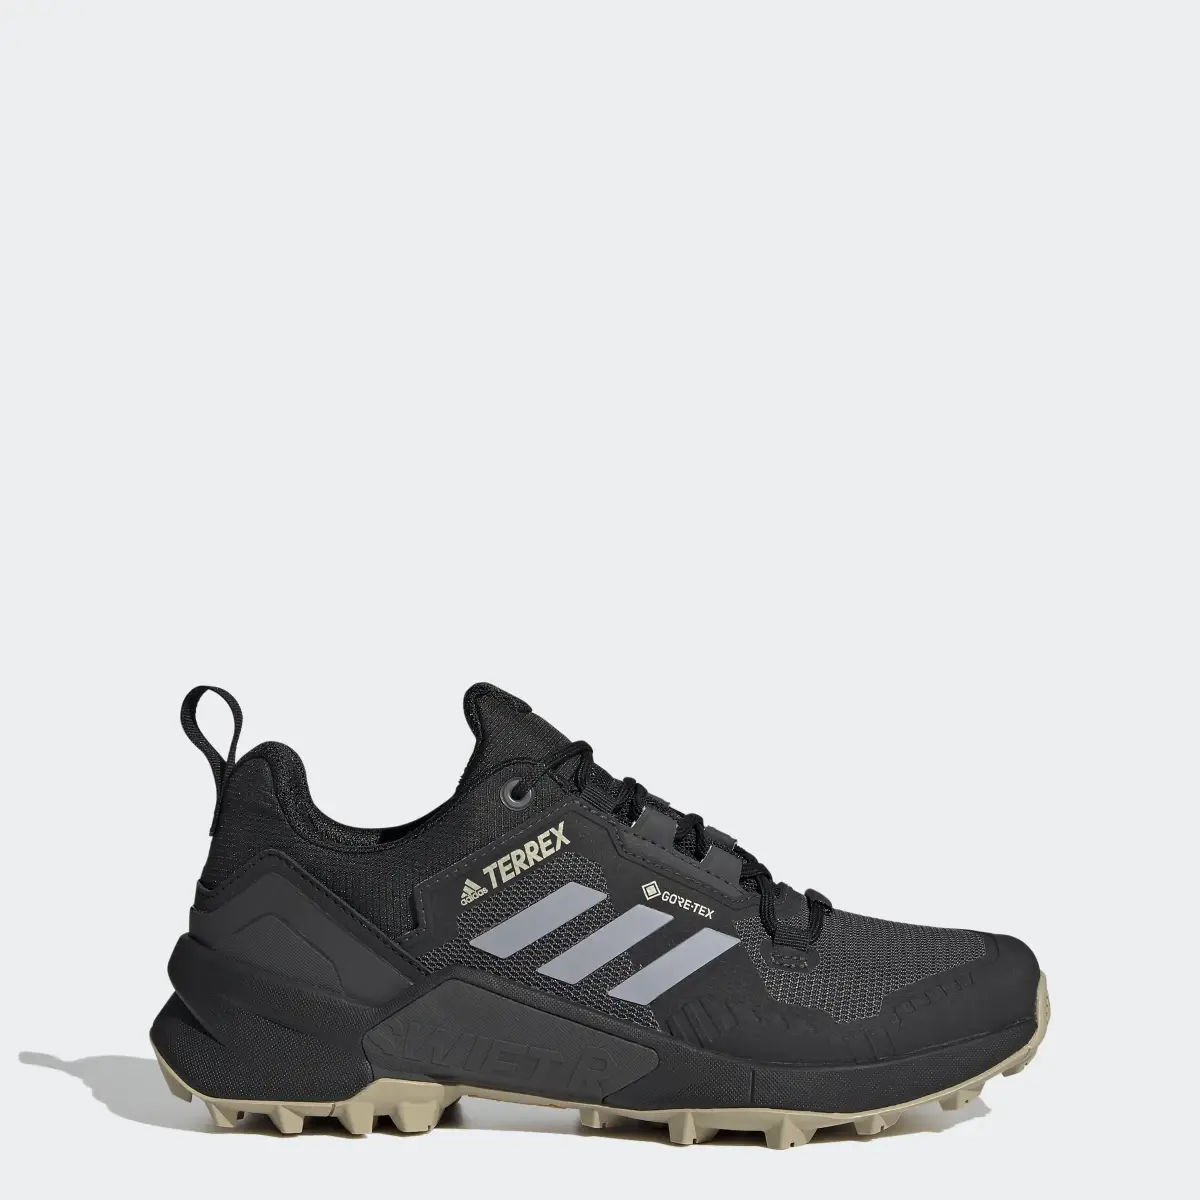 Adidas Terrex Swift R3 GORE-TEX Hiking Shoes. 1